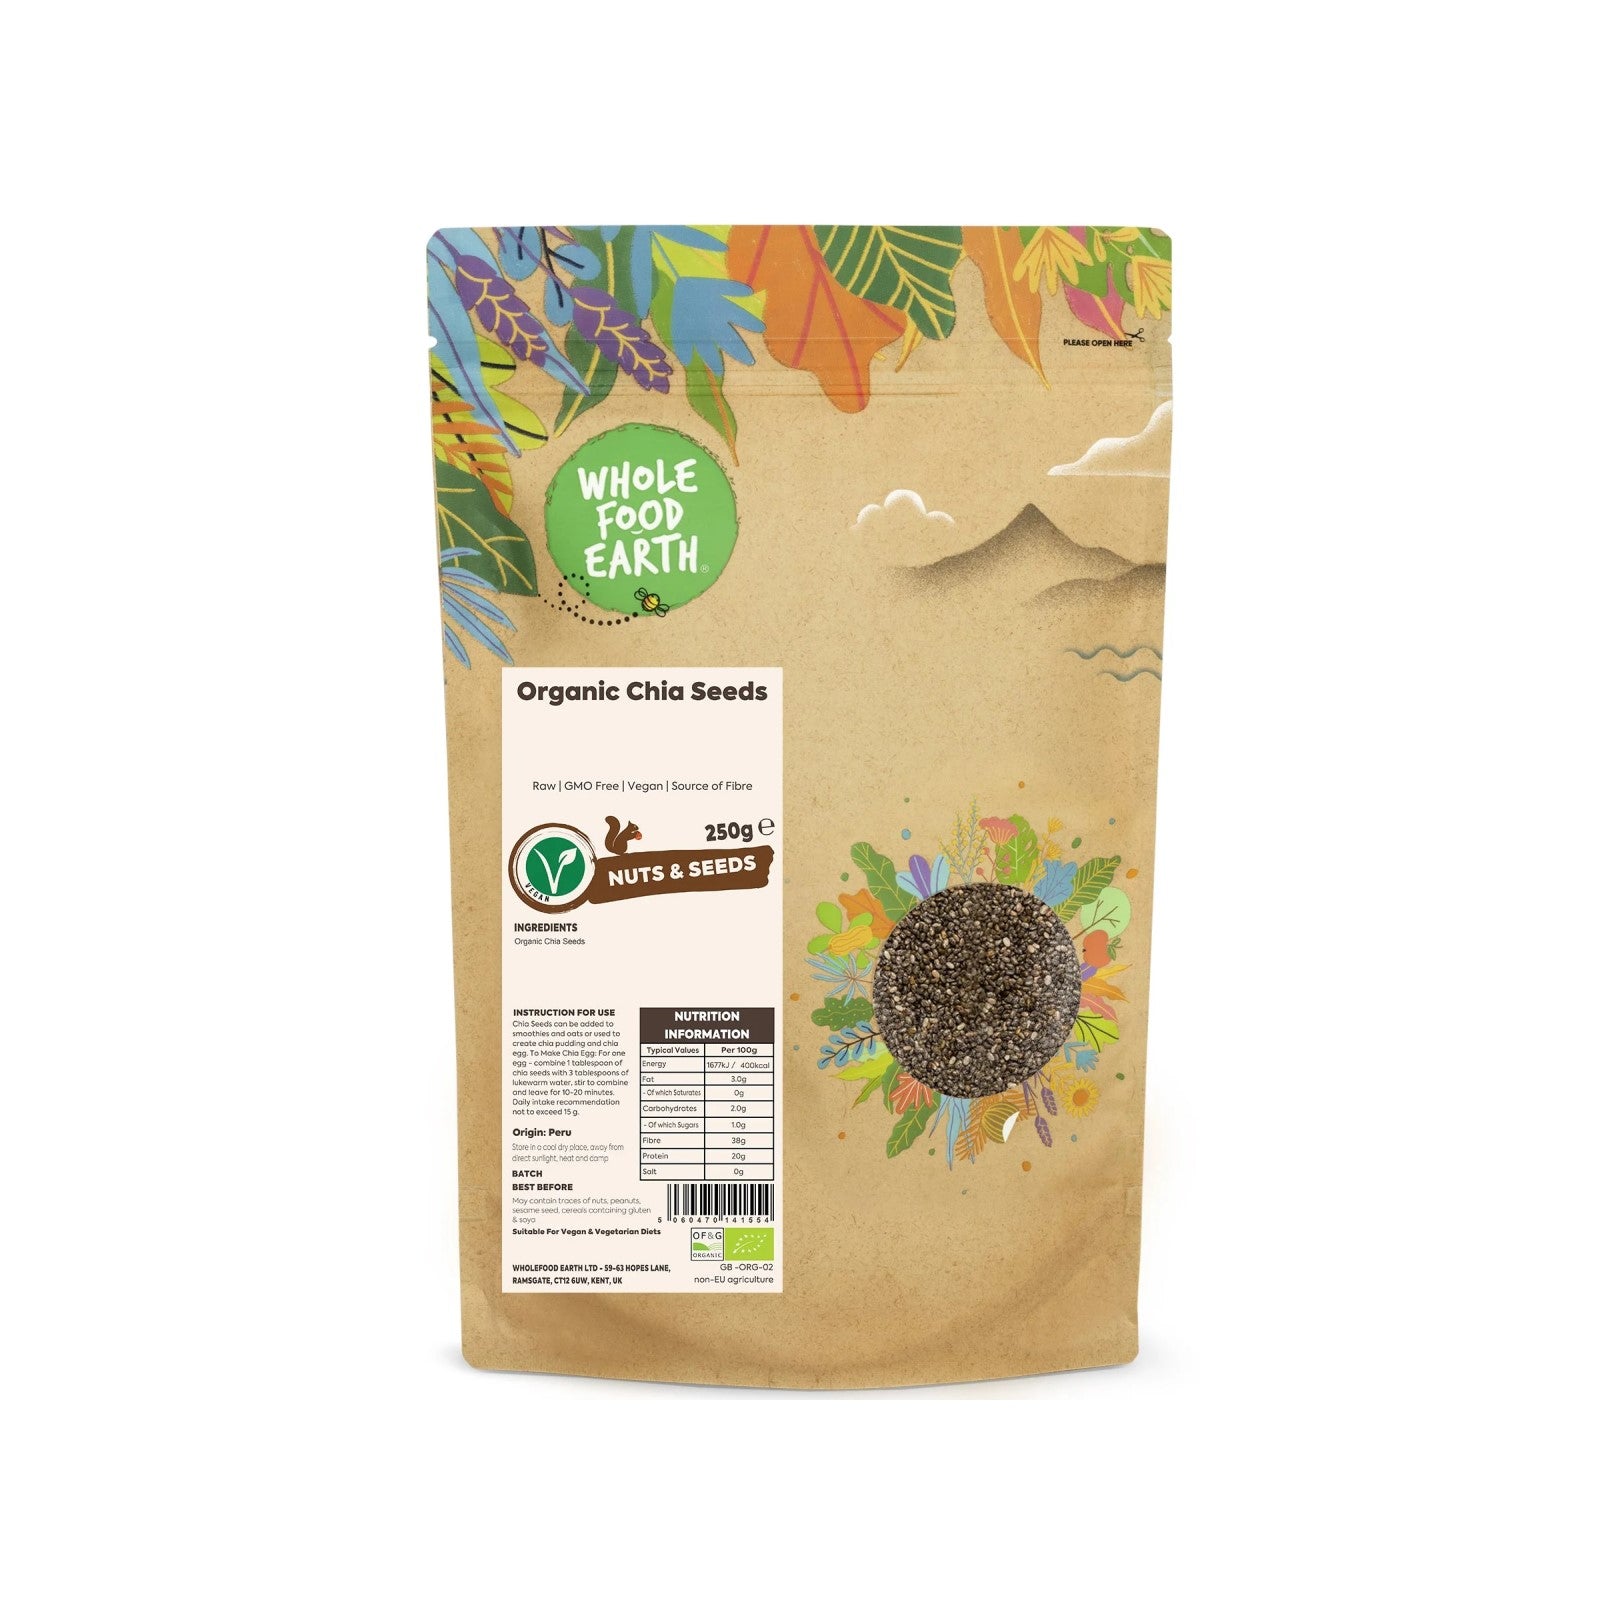 A bag of organic chia seeds